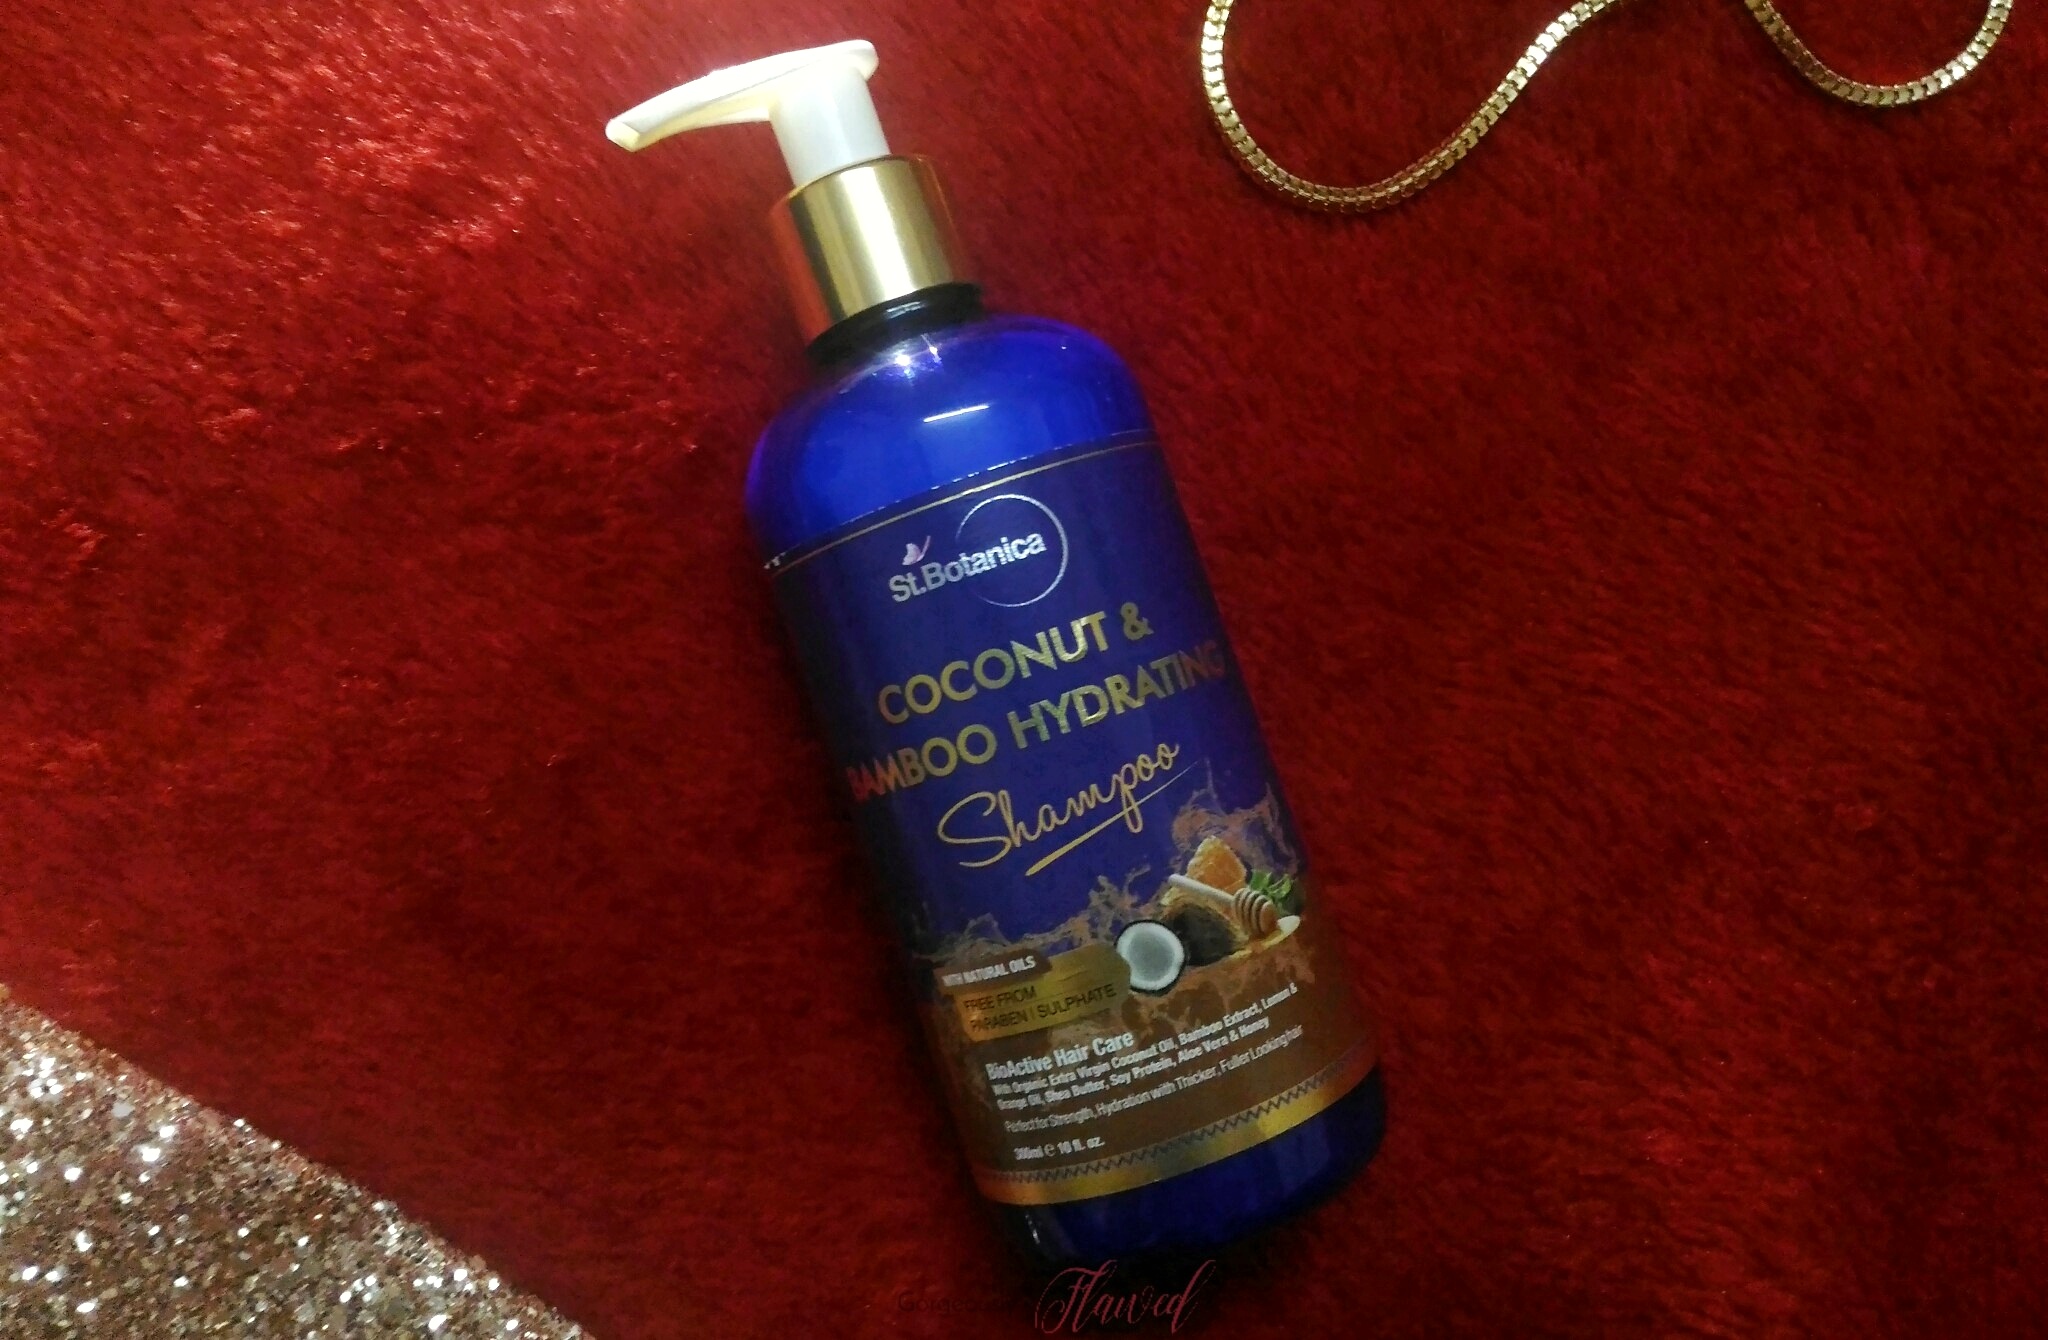 shampoo sample